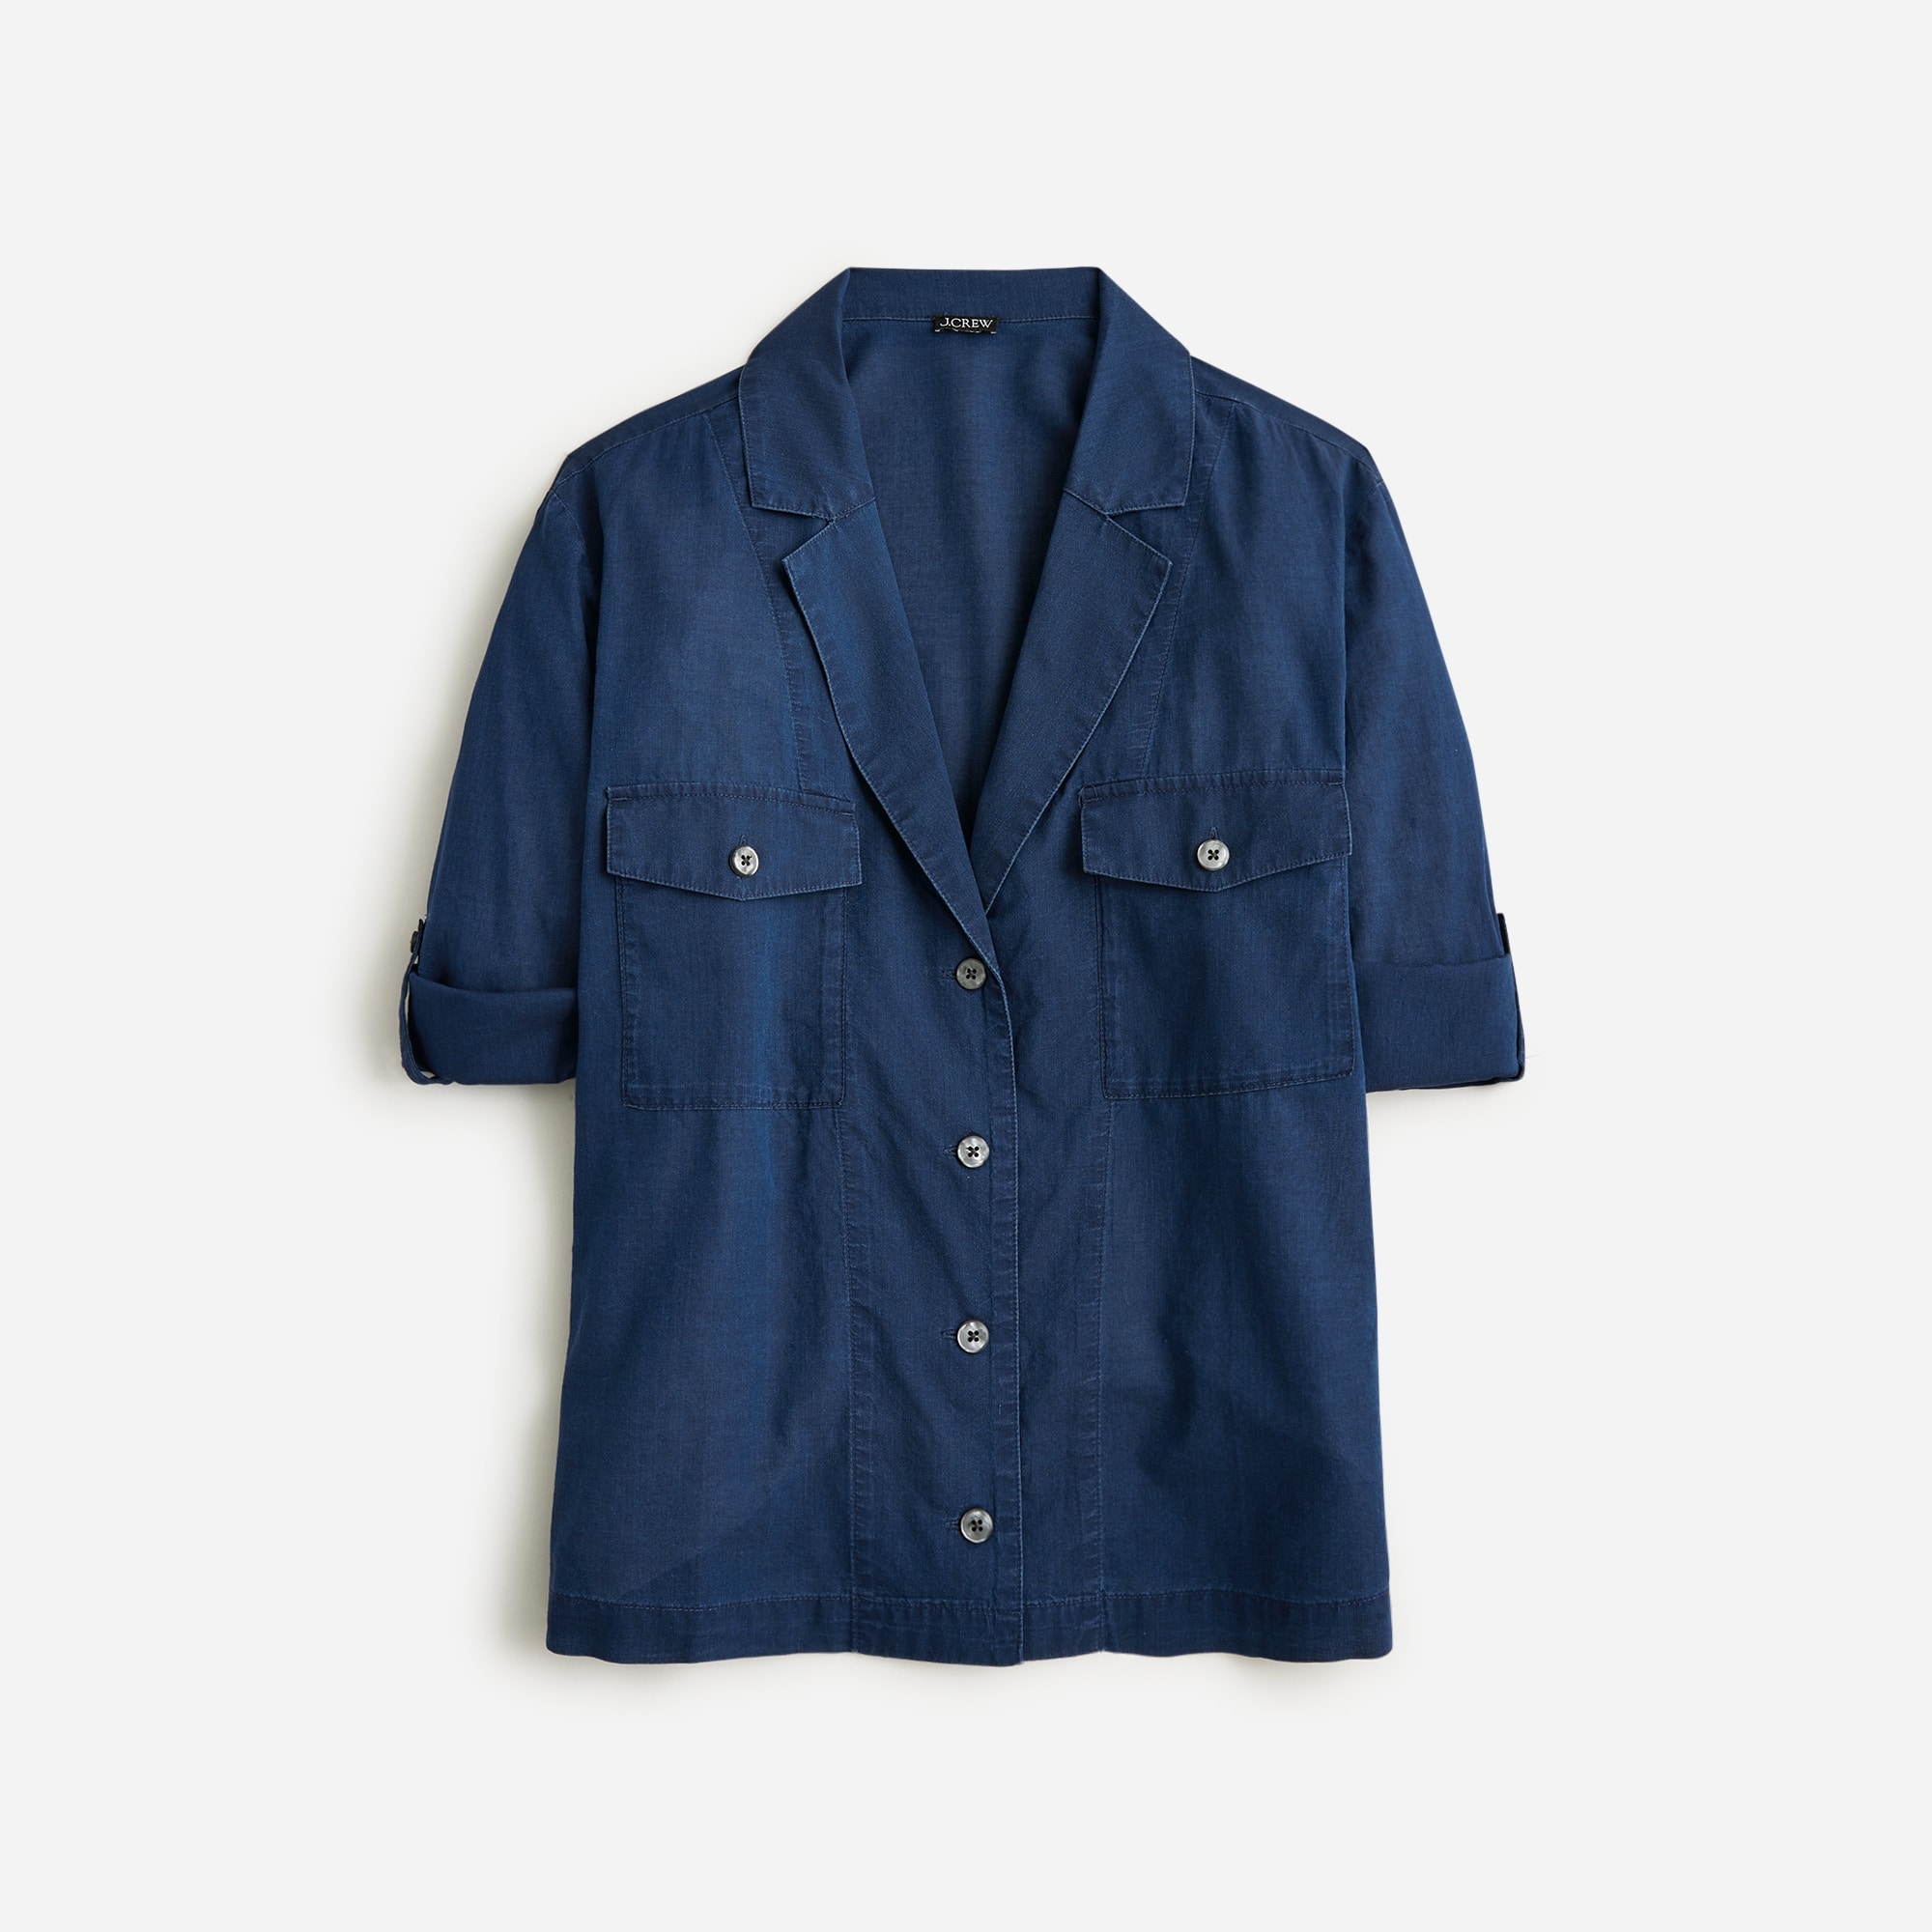  Camp-collar shirt in indigo cotton voile